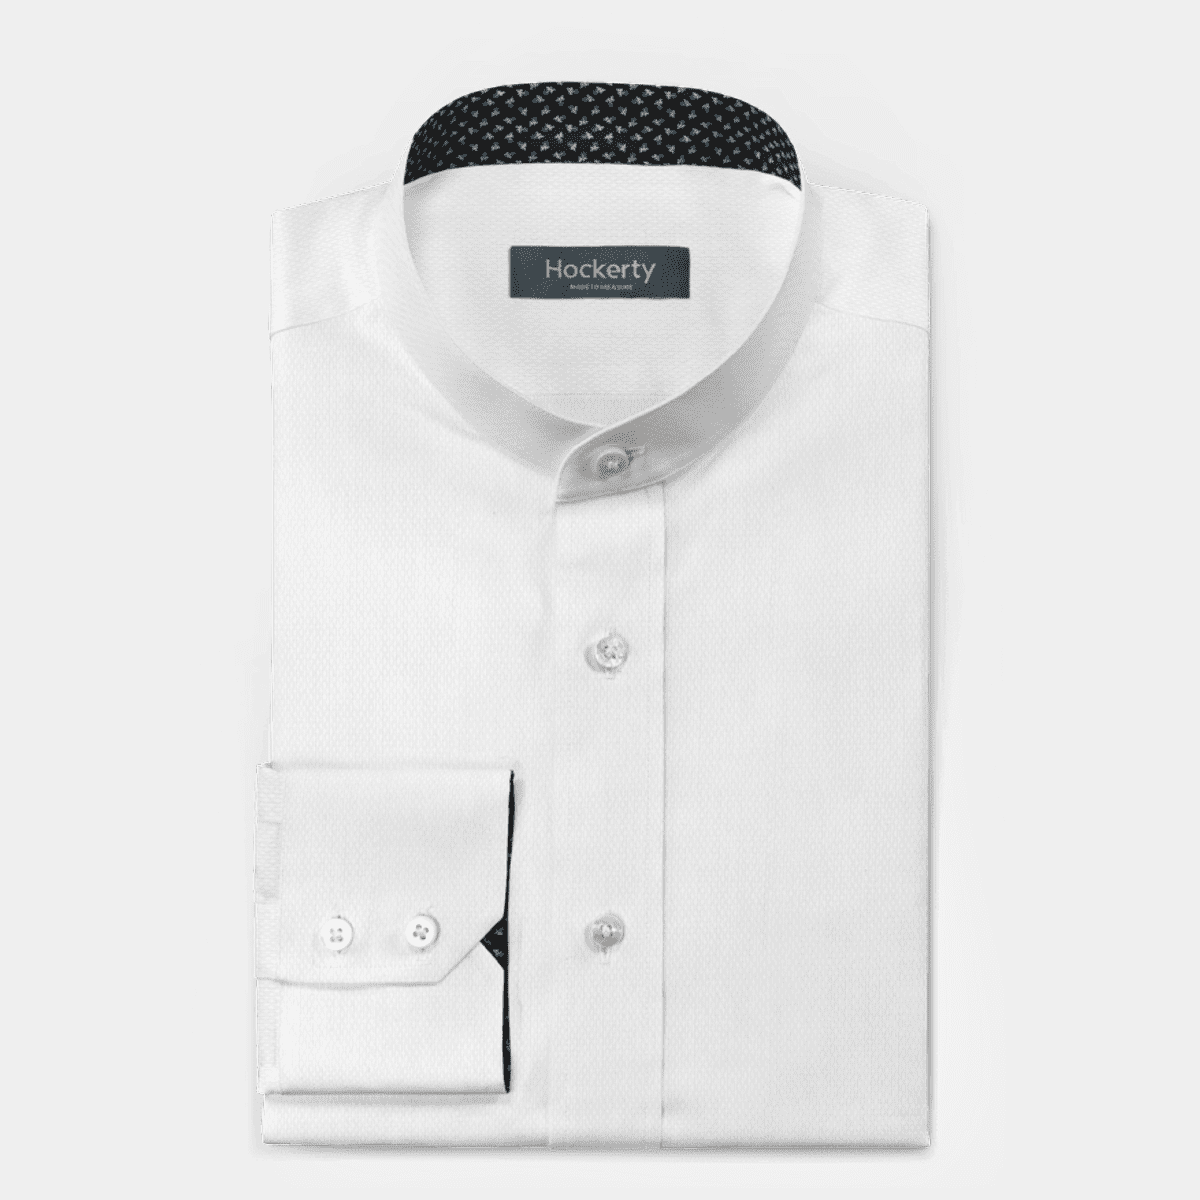 White No Iron Mandarin Collar Shirt With Contrast Collar Hockerty